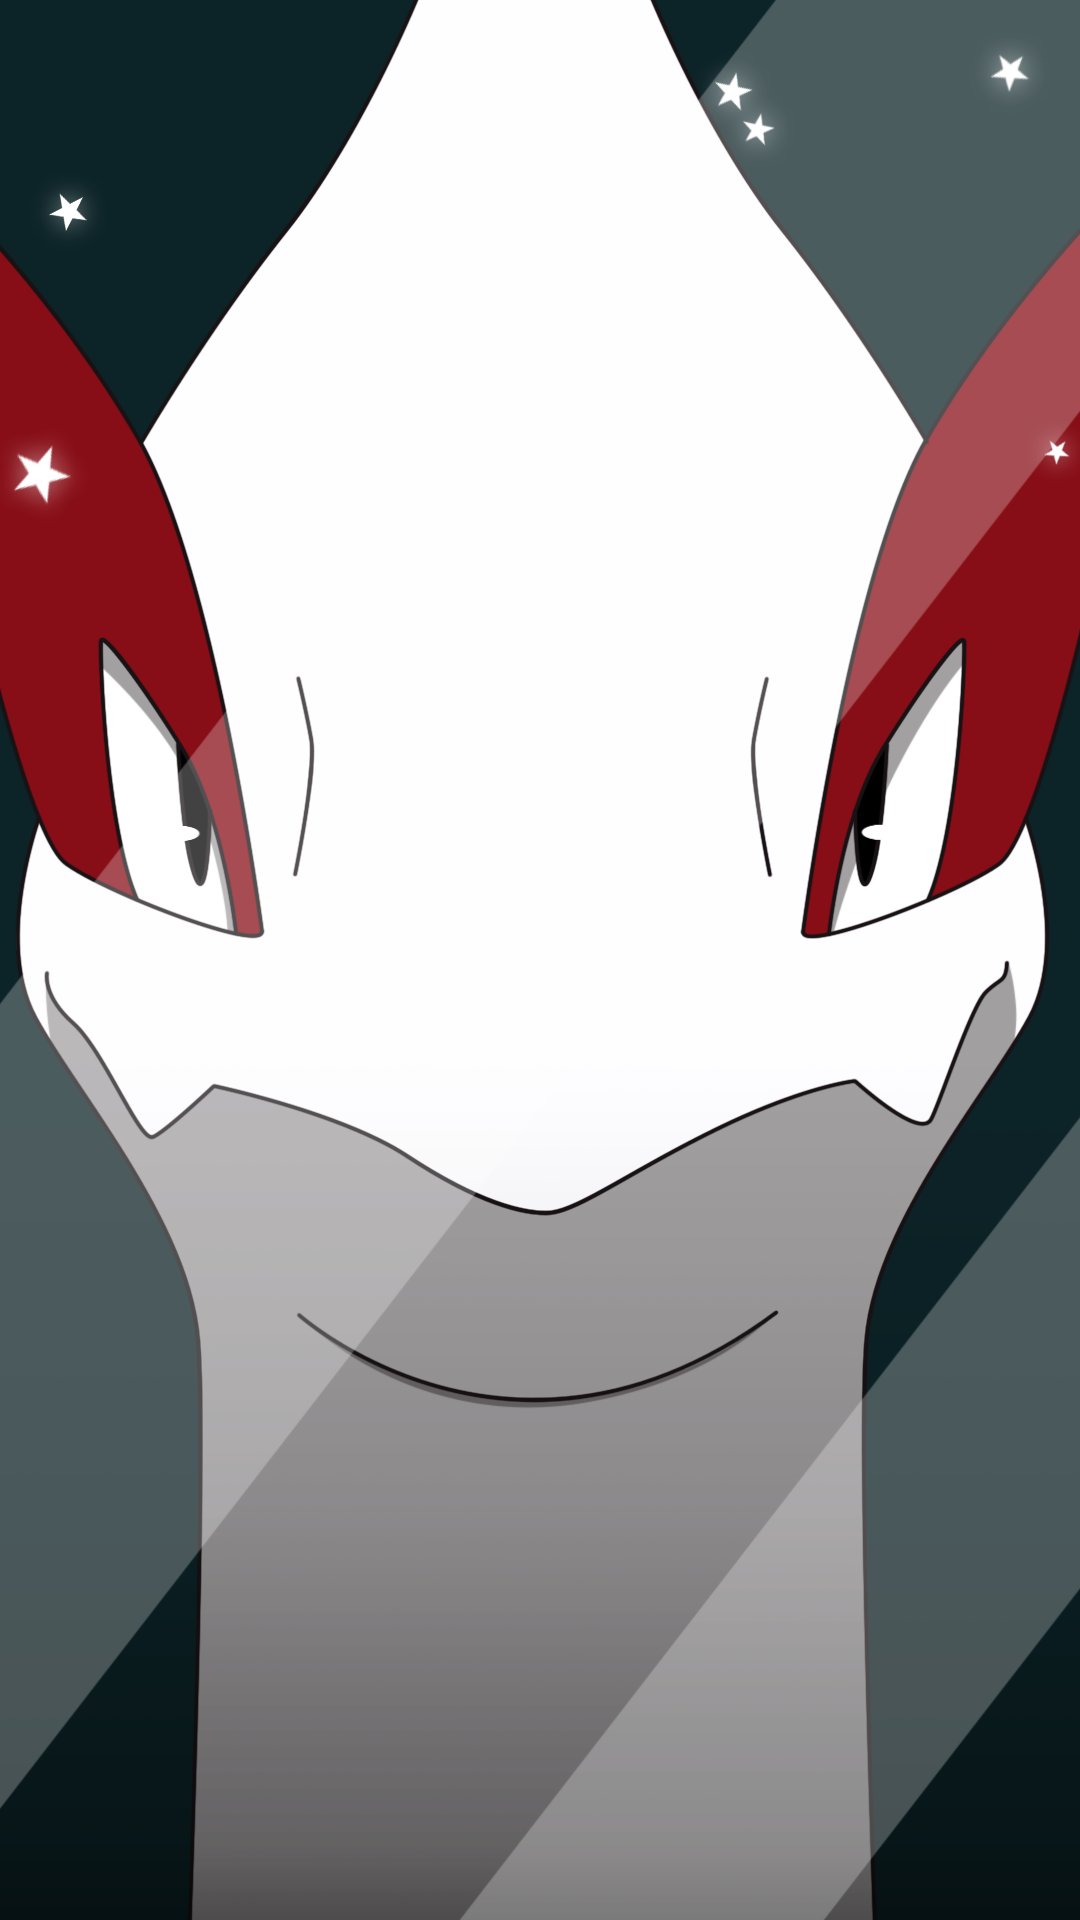 All0412 ✪ on X: Pokémon Mobile Wallpaper: Lucario #Fanart #Sinnoh #Shiny   / X